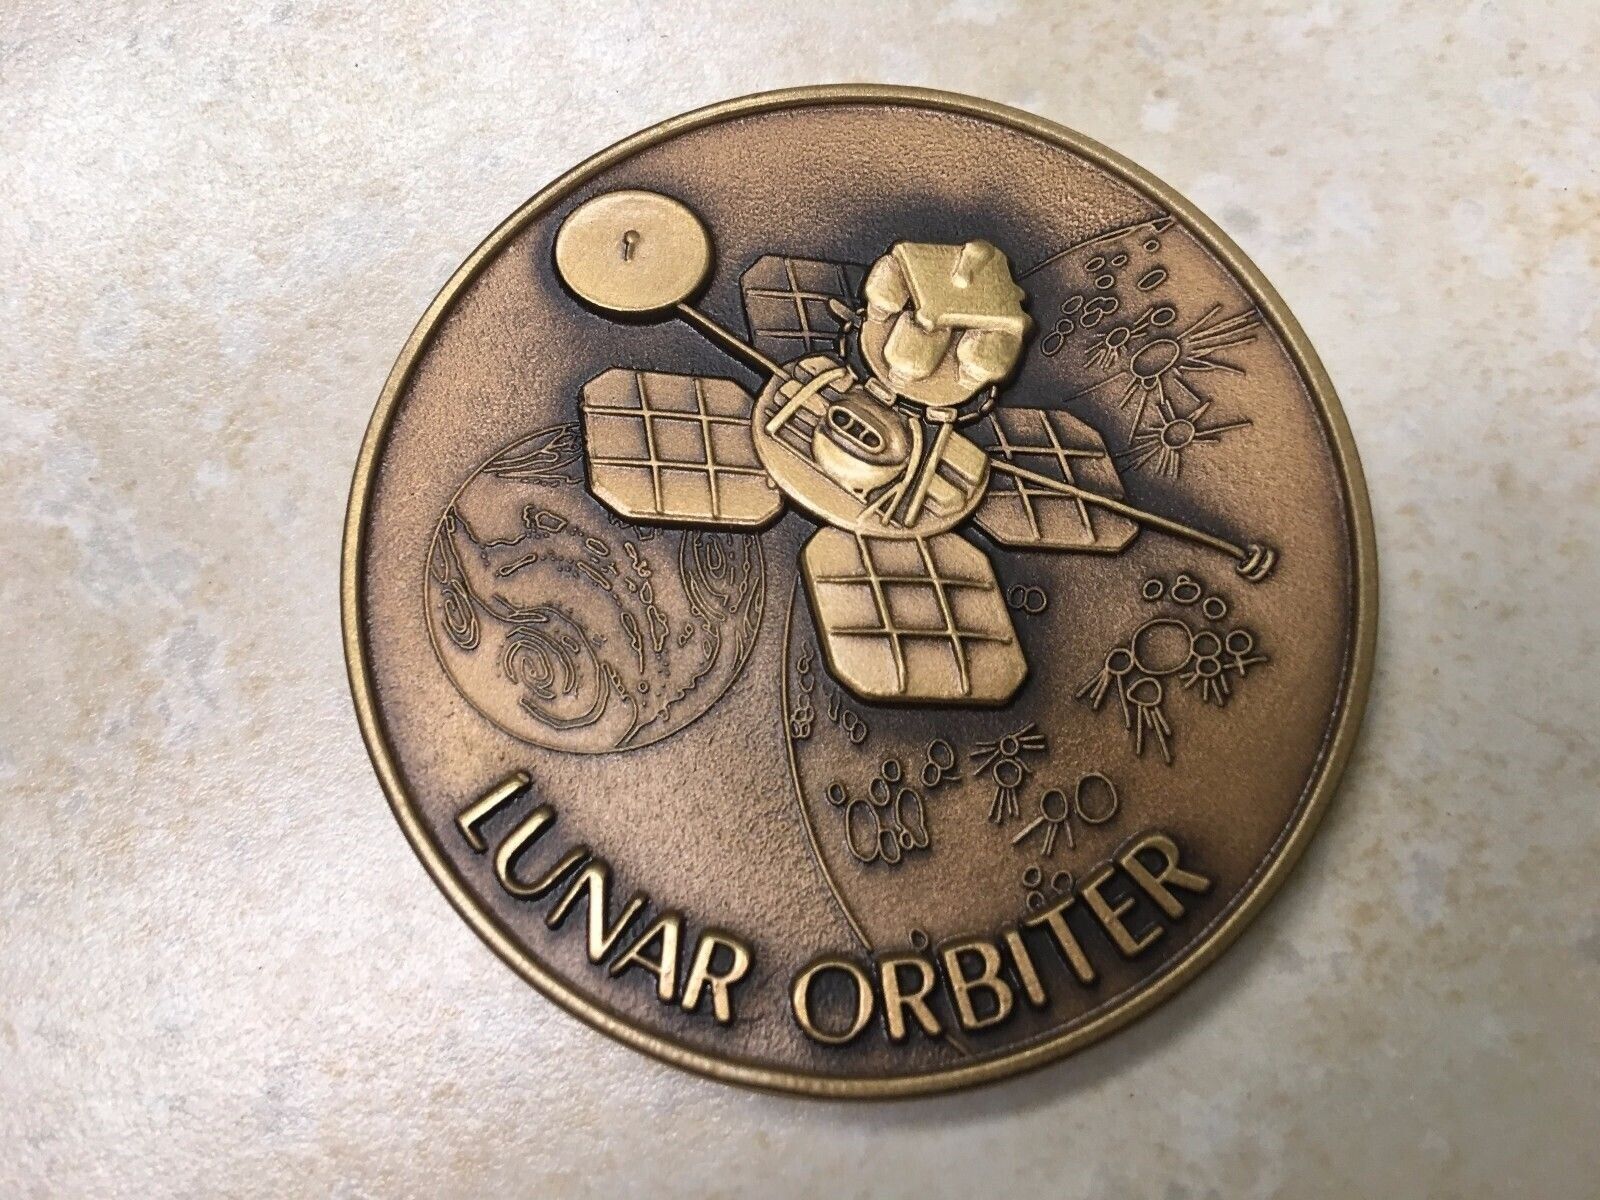 Lunar Orbiter Brass Medallion from a former Boeing Employee